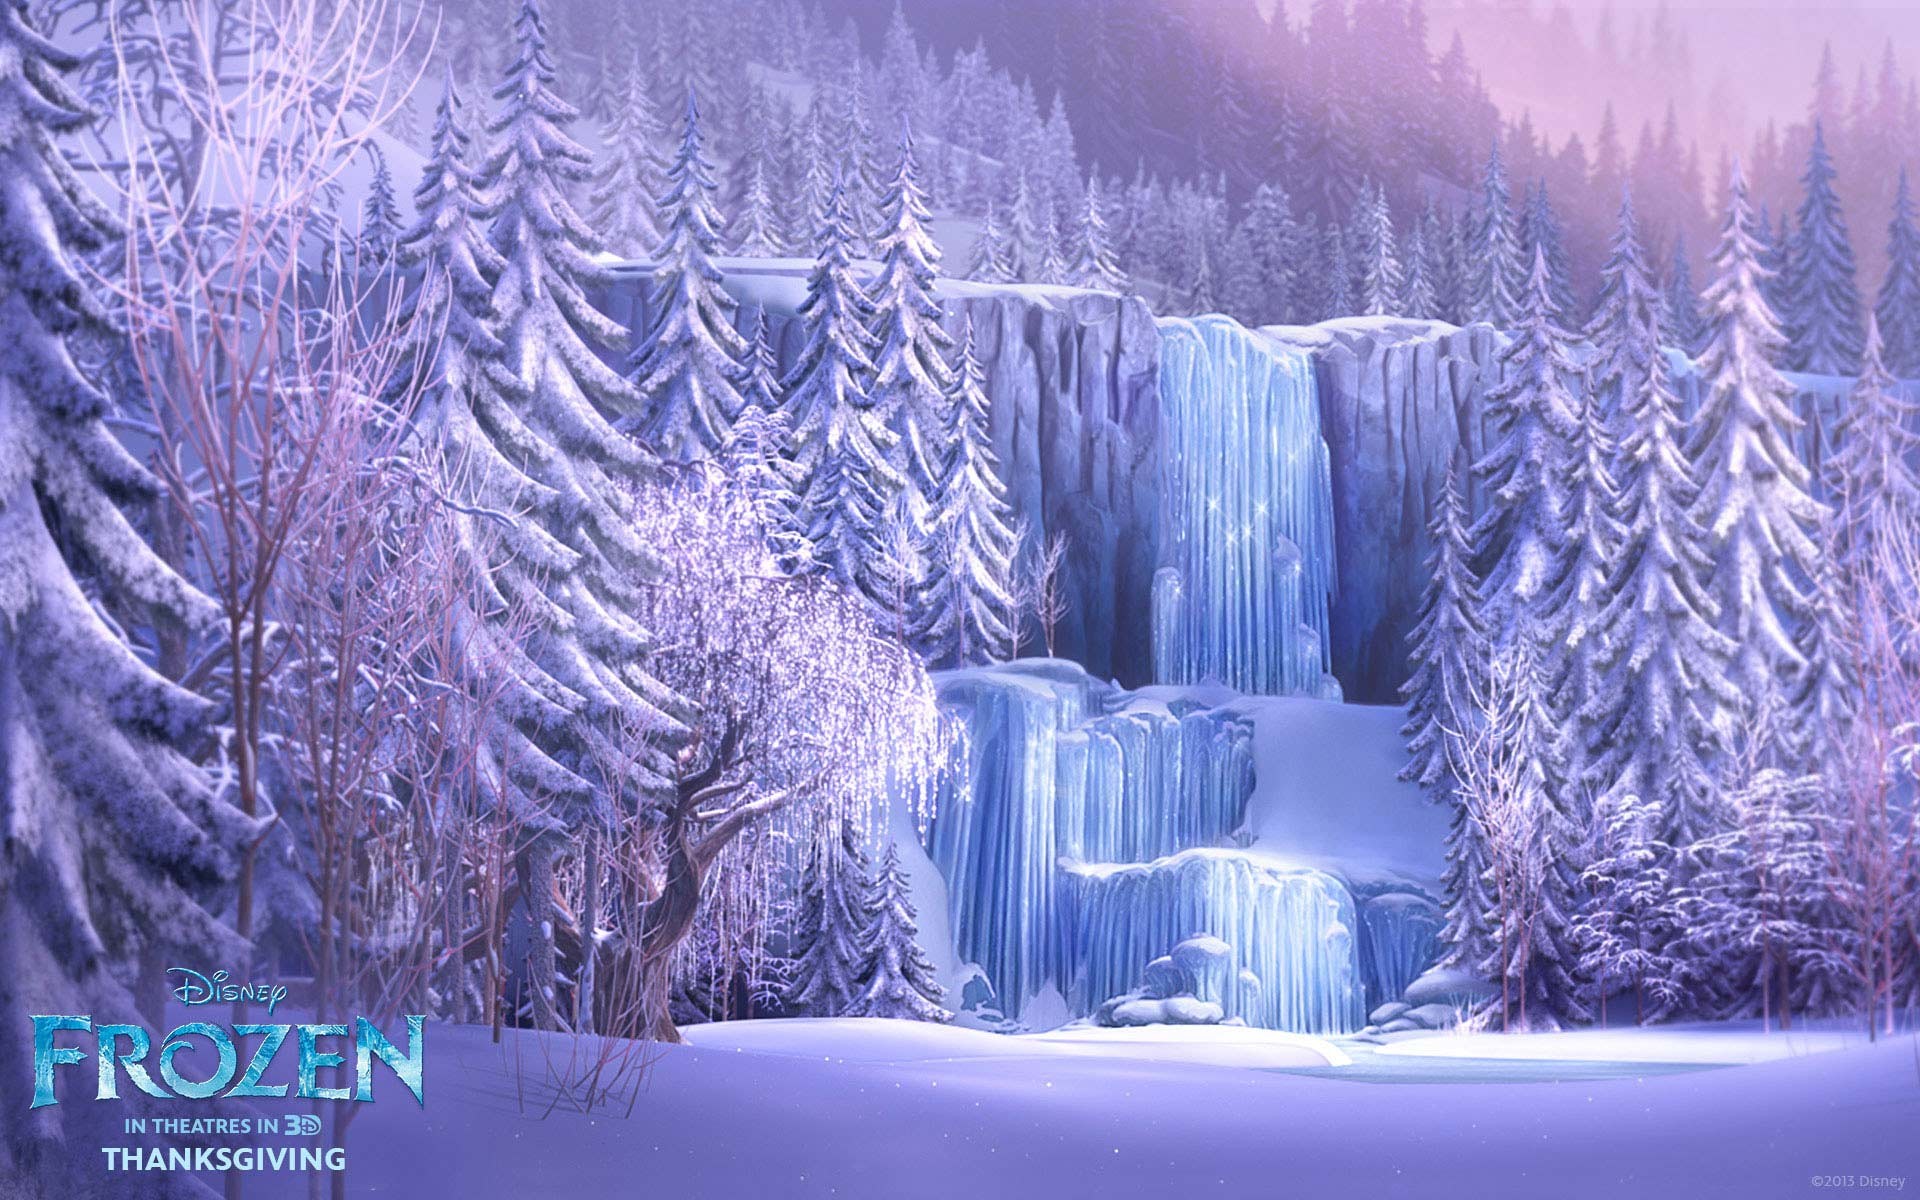 Disney Frozen Movie Waterfall HD Wallpaper Image for iPad mini 3